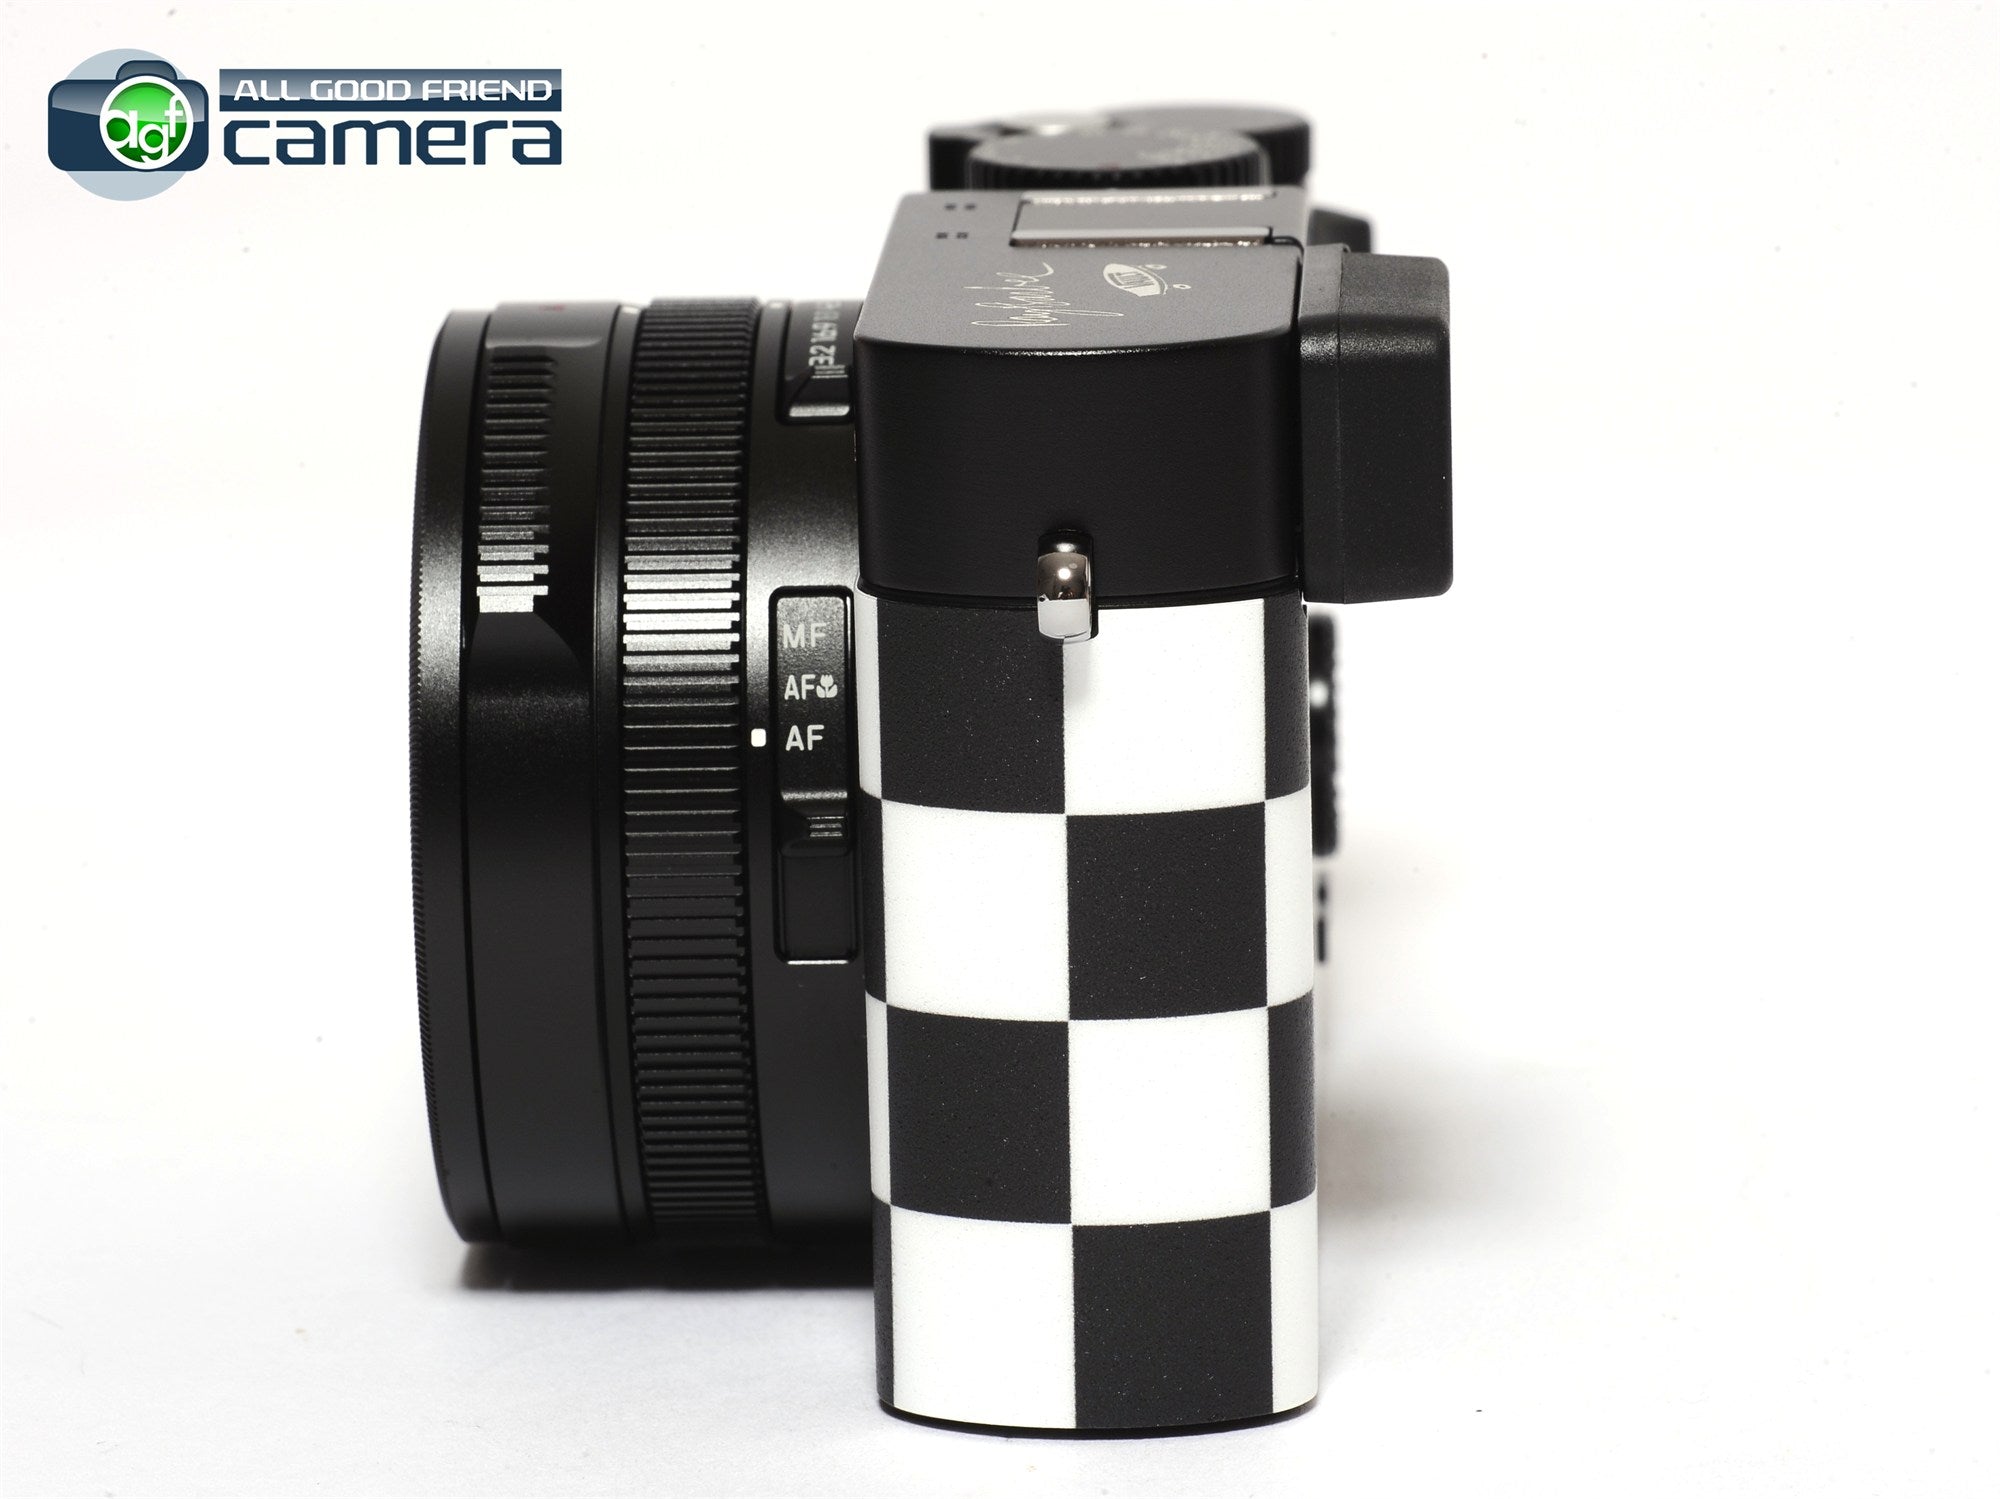 Leica D-Lux 7 Digital Camera - Silver